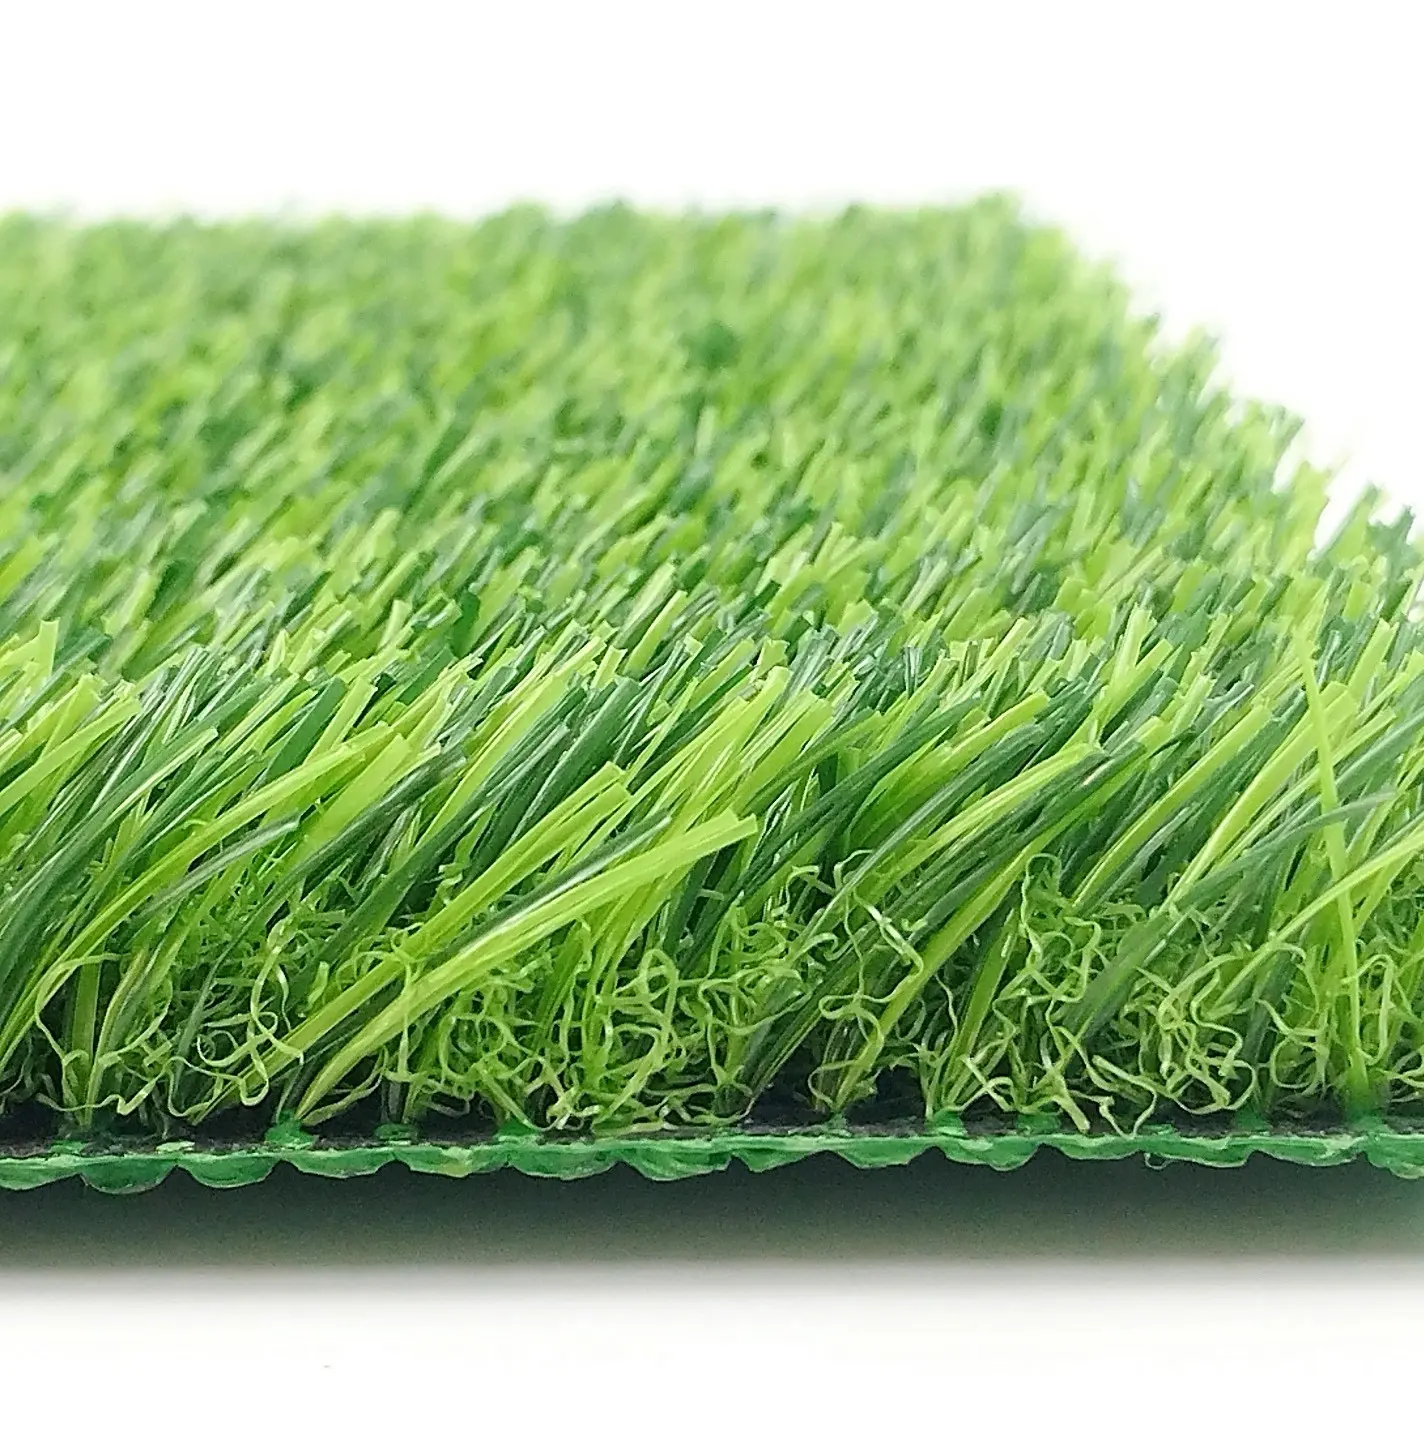 40mm rug football play outdoor 50mm putting green simulate artificial grass decor field landscape carpet lawn turf